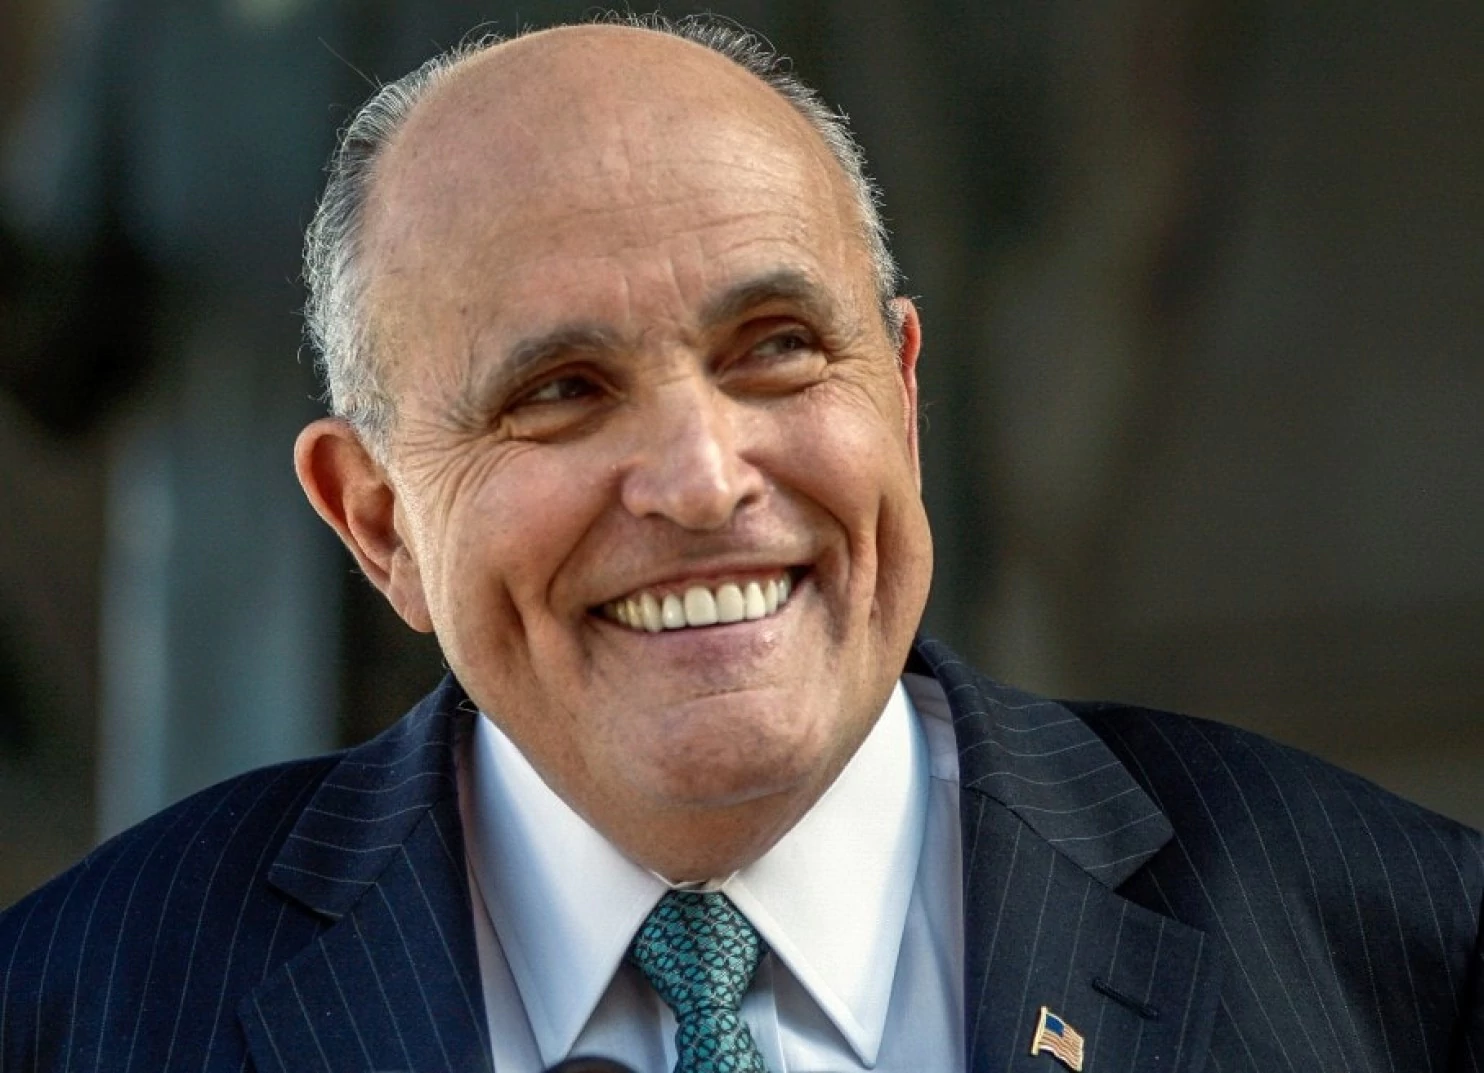 Rudy Giuliani How Rudy Giuliani marginalized himself The Washington Post